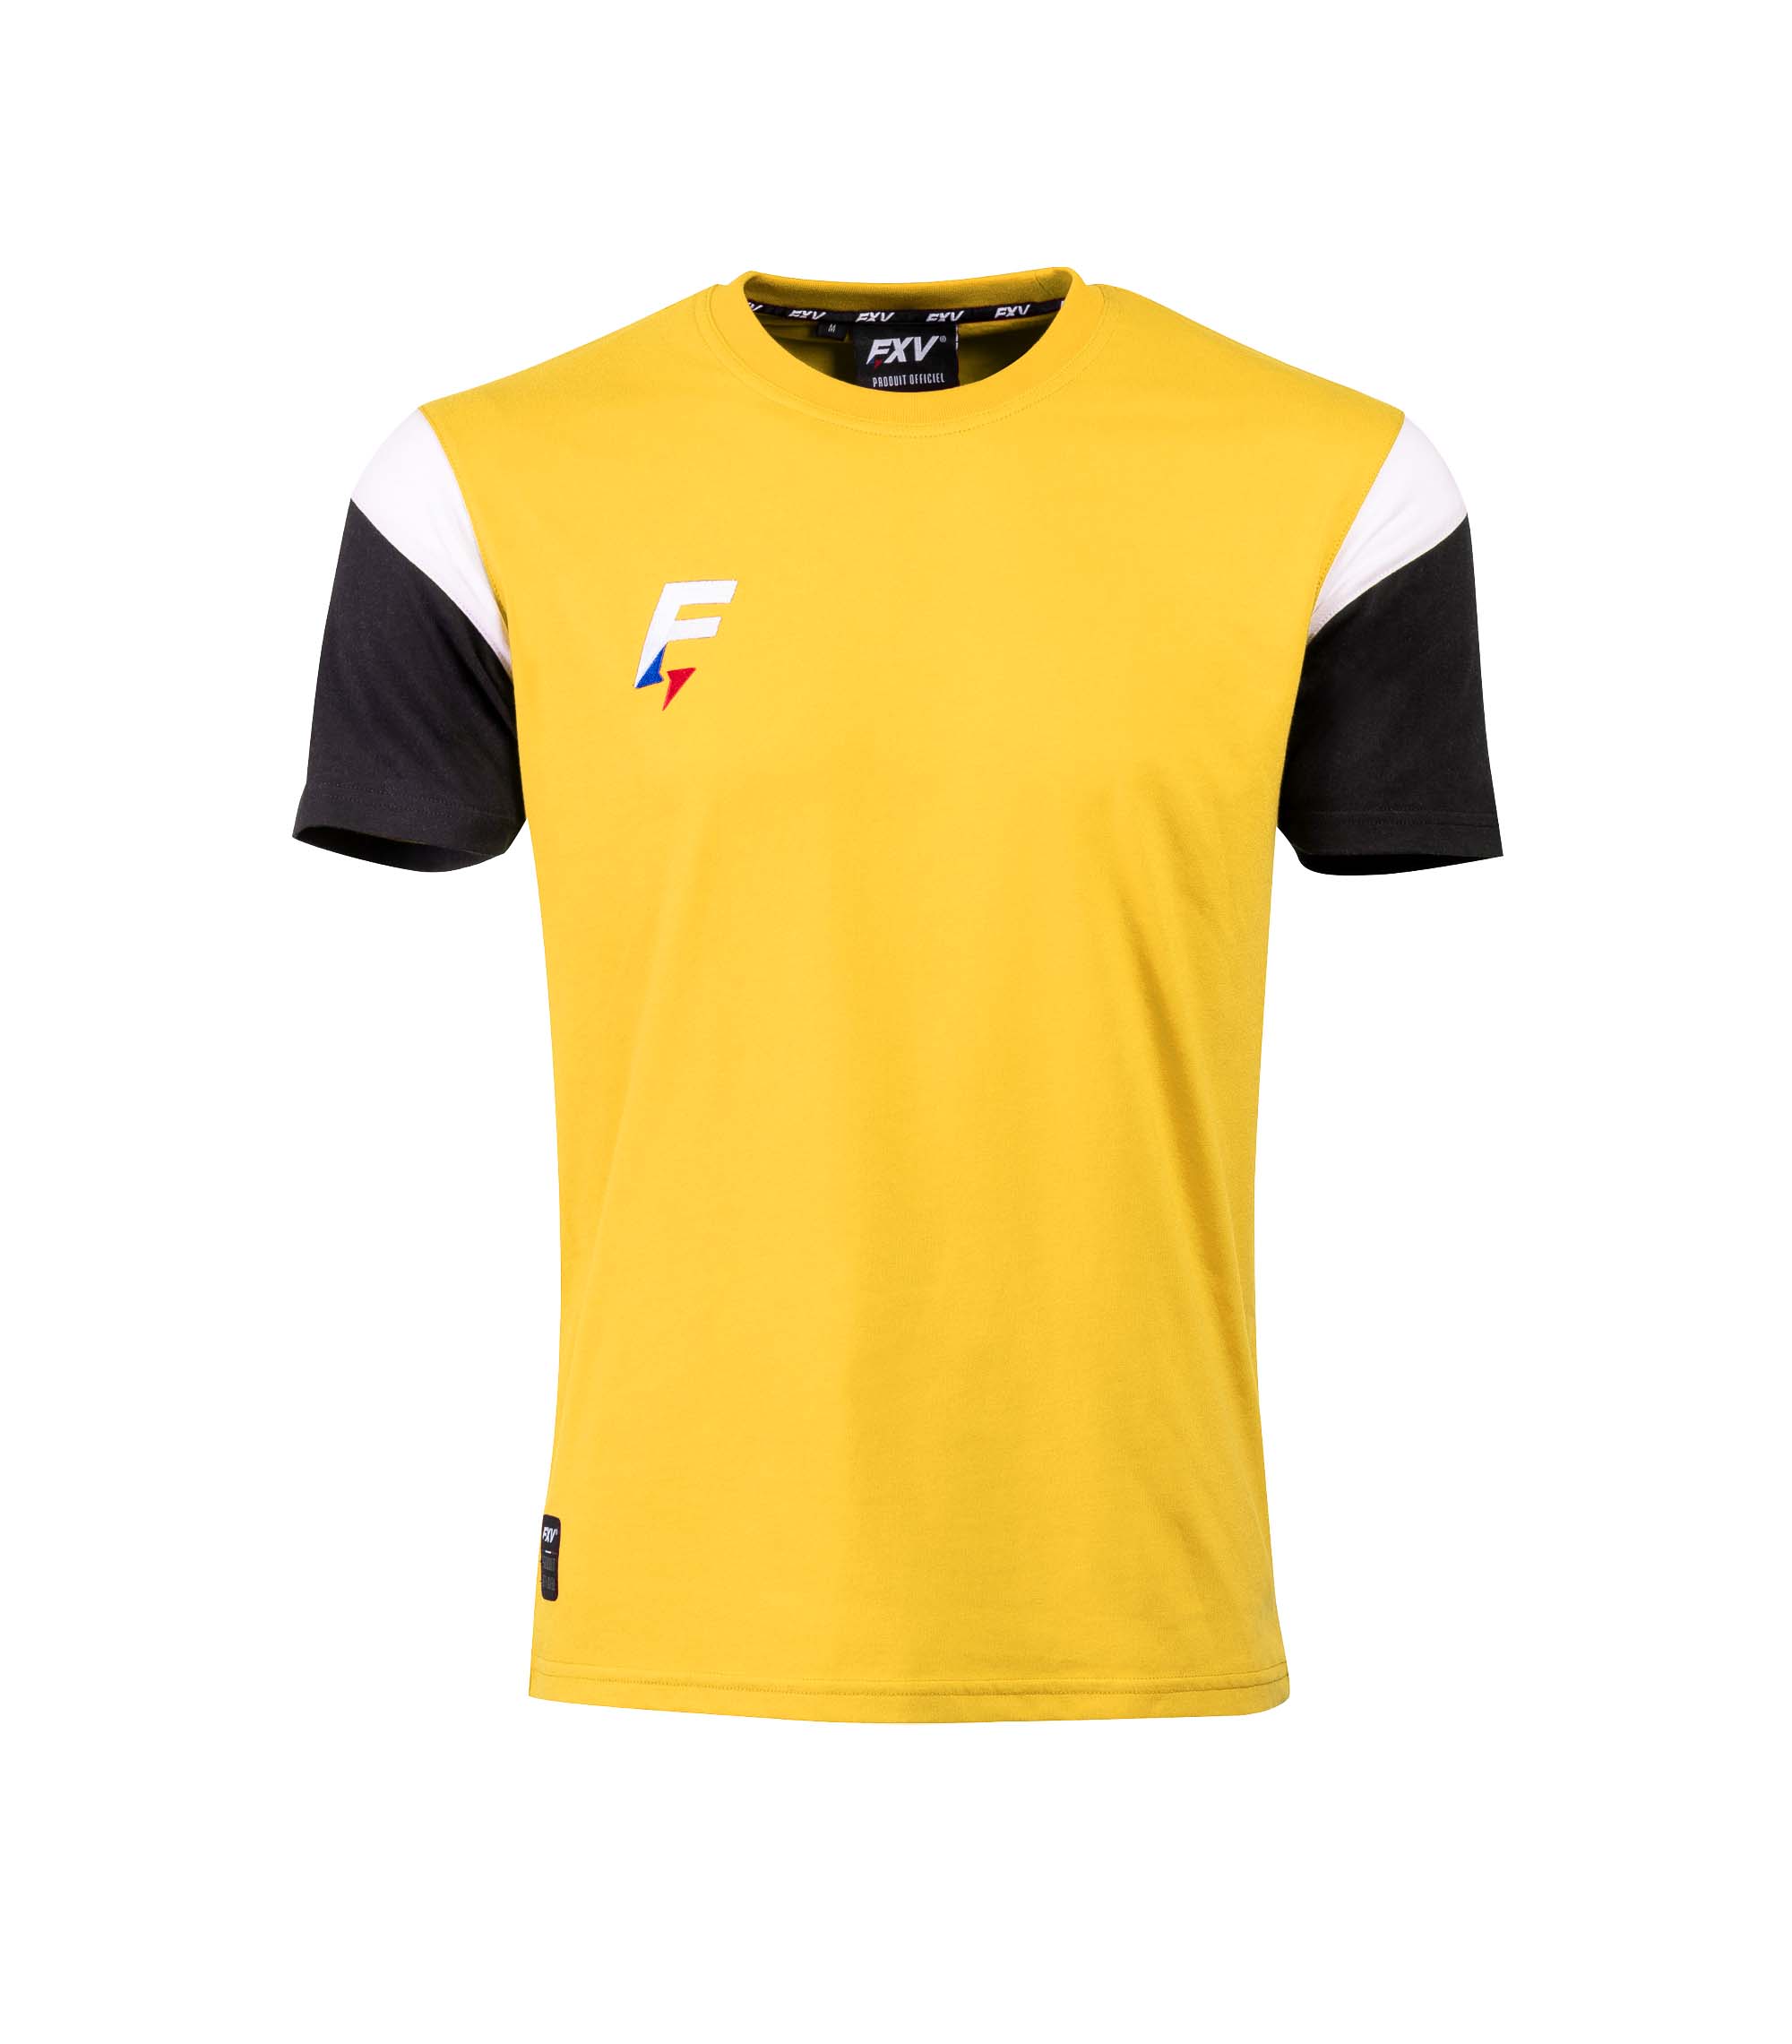 Tee-shirt de rugby Force XV CONQUETE jaune-noir